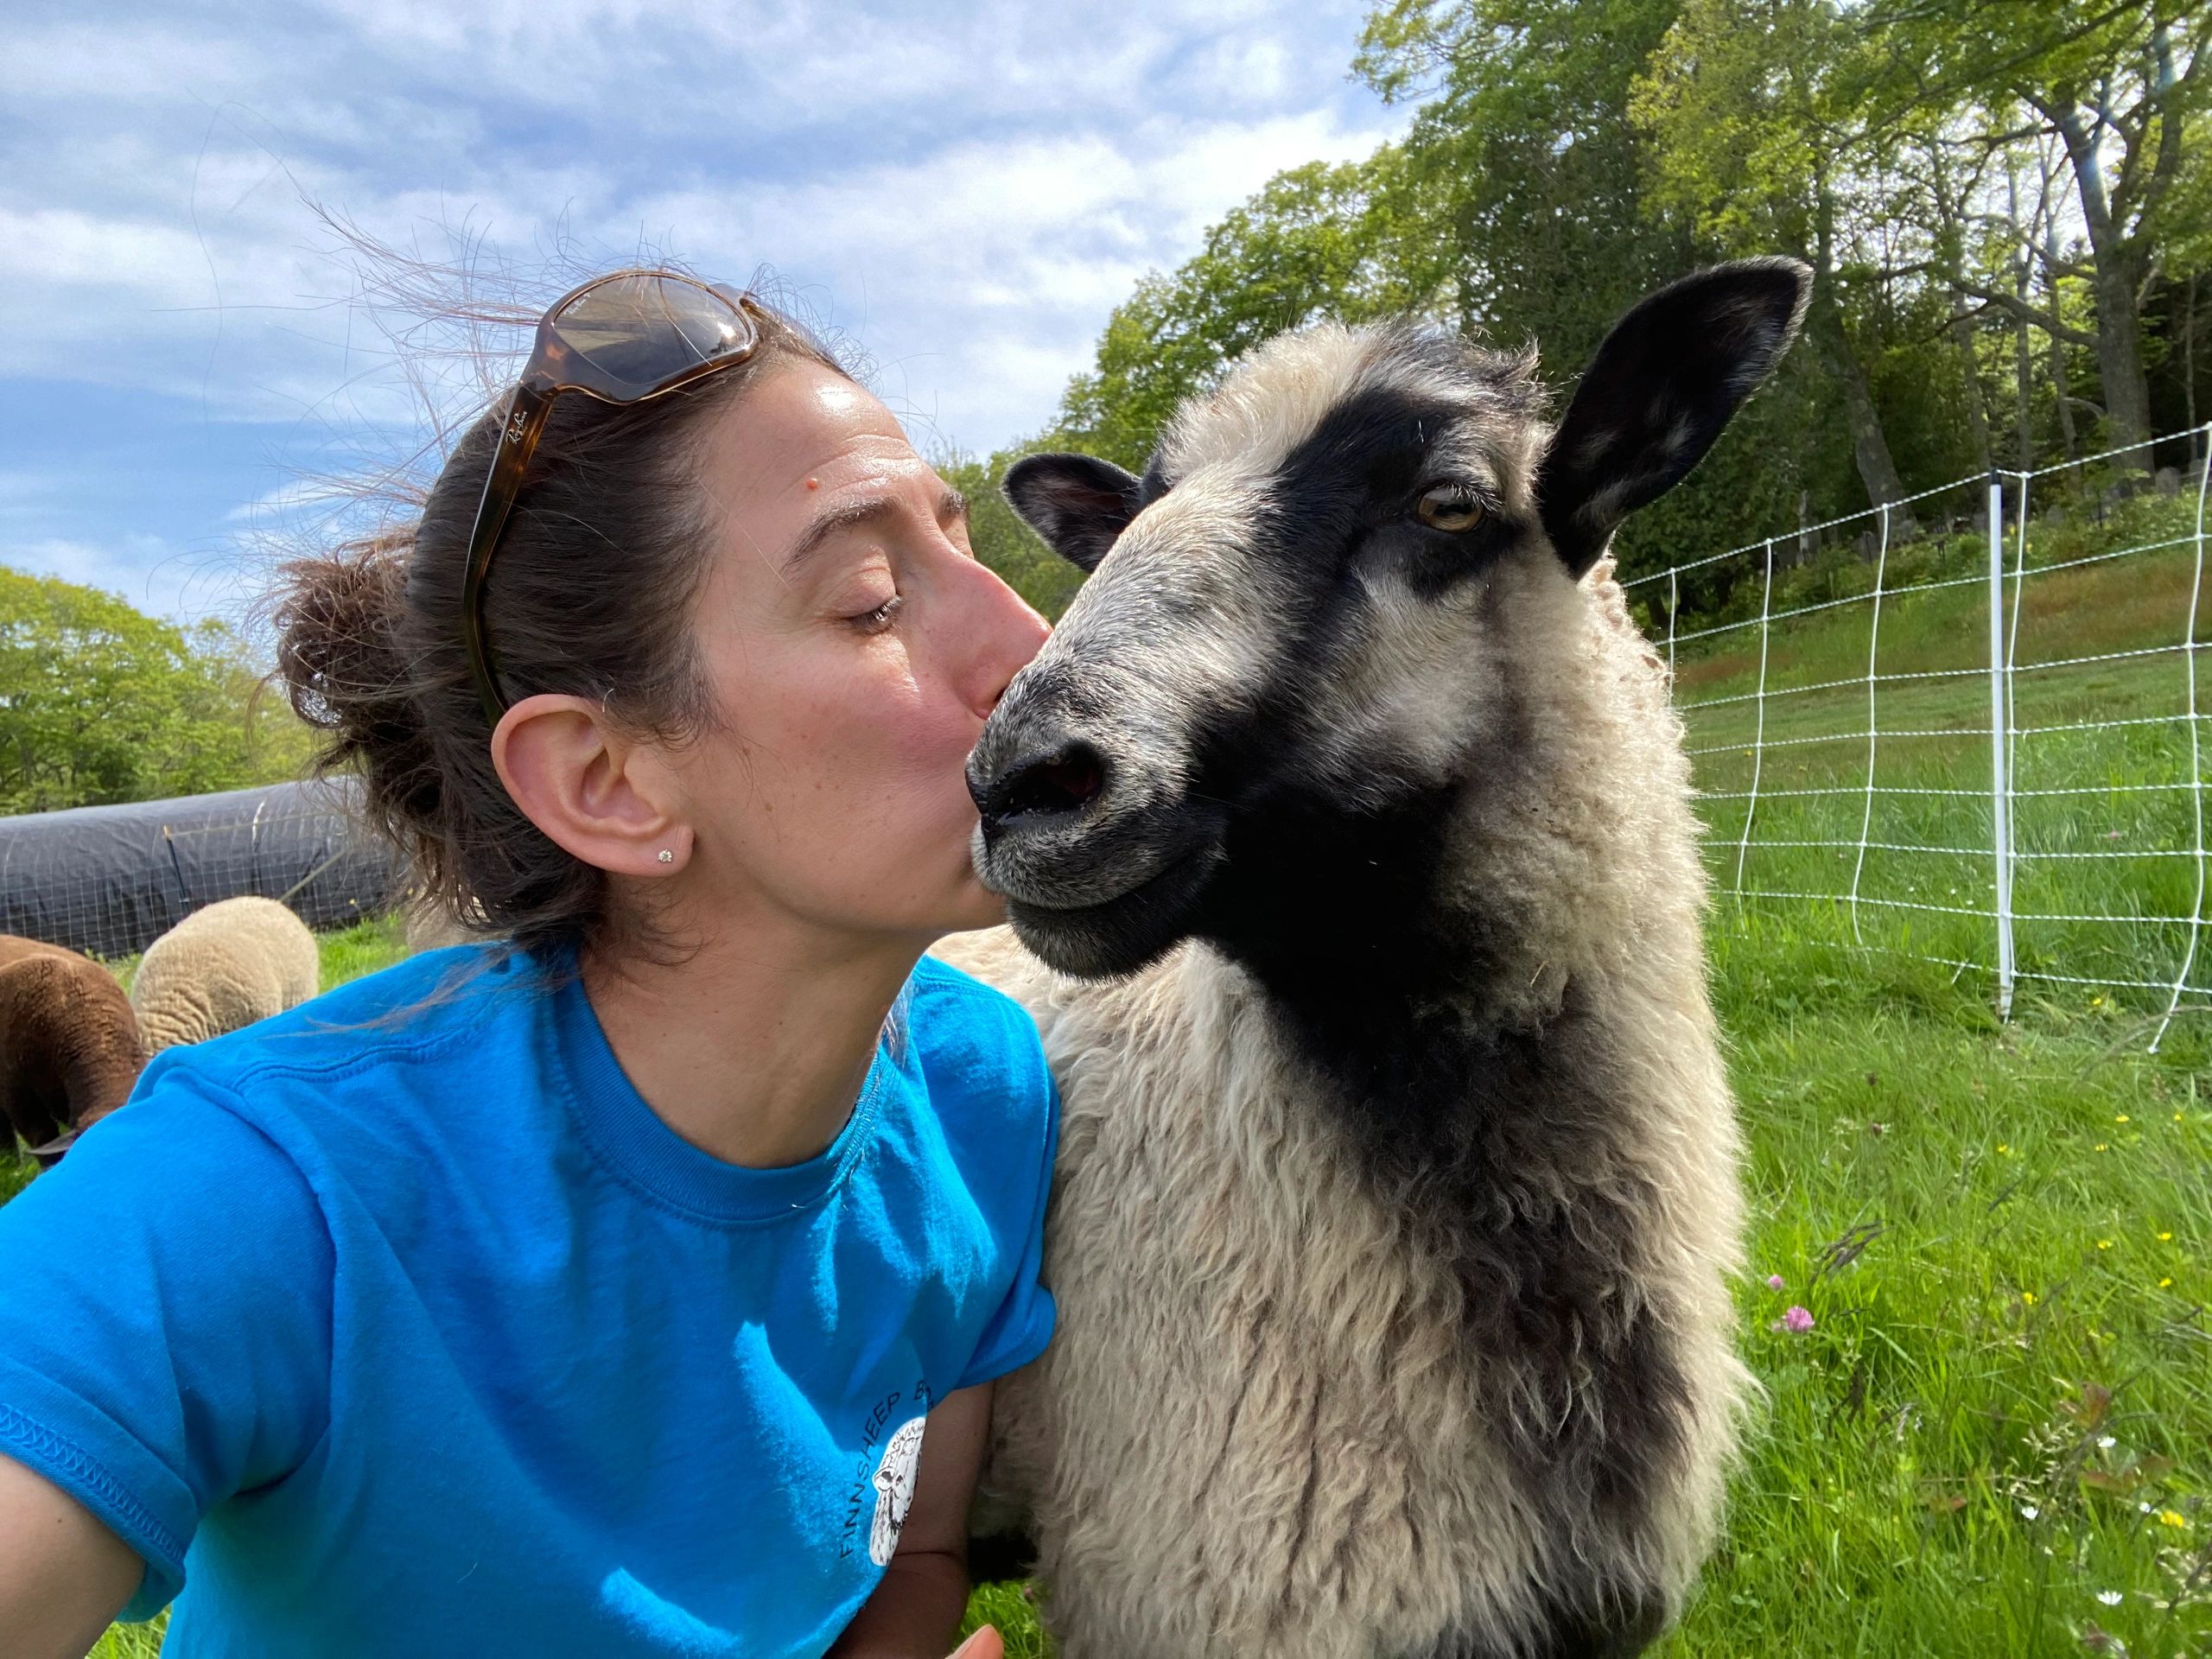 Me kissing the sheep